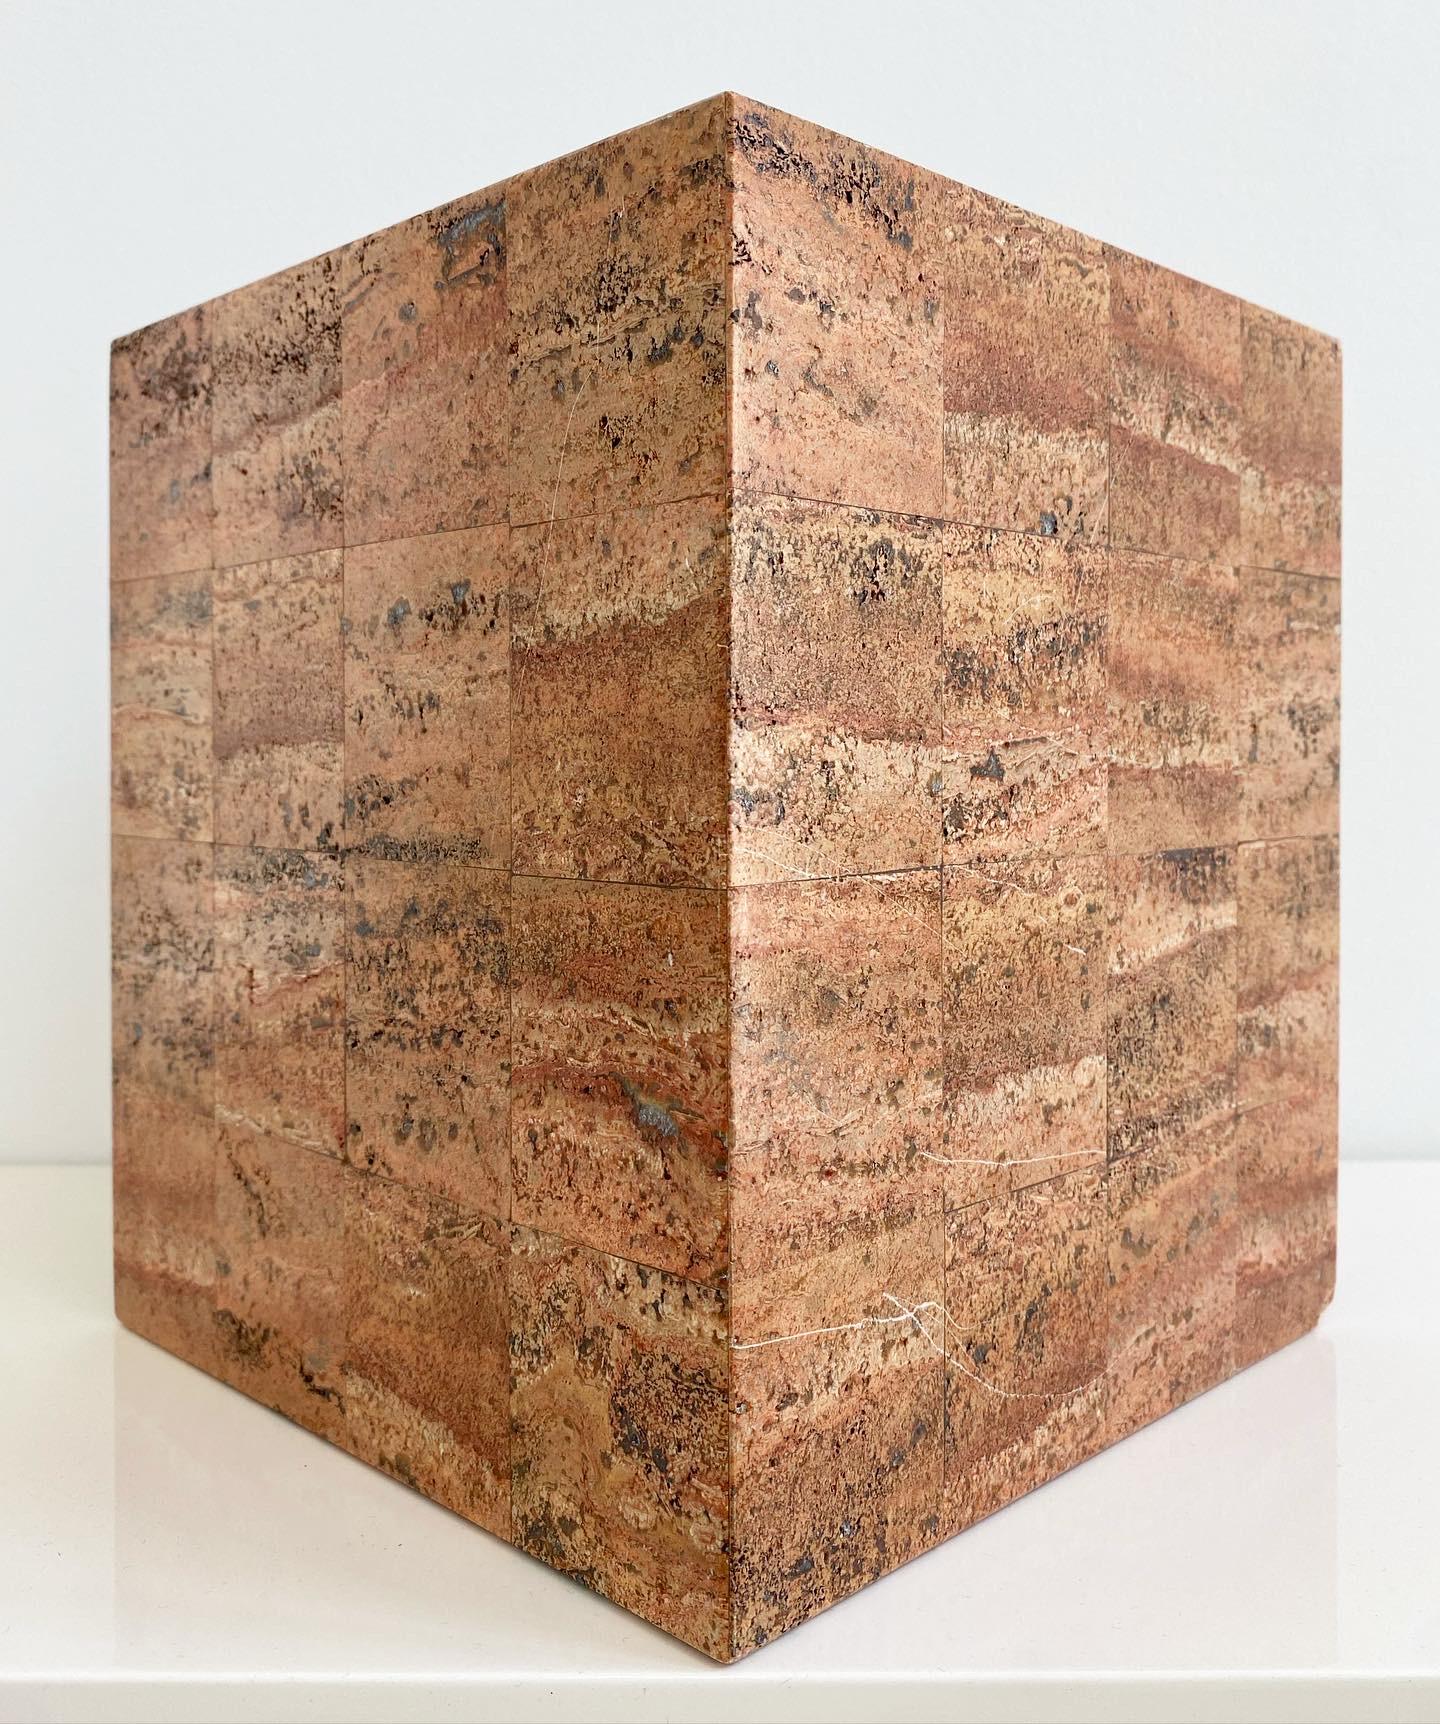 Minimalist Modernist Red Travertine Cube Form Planter Vessel For Sale 5